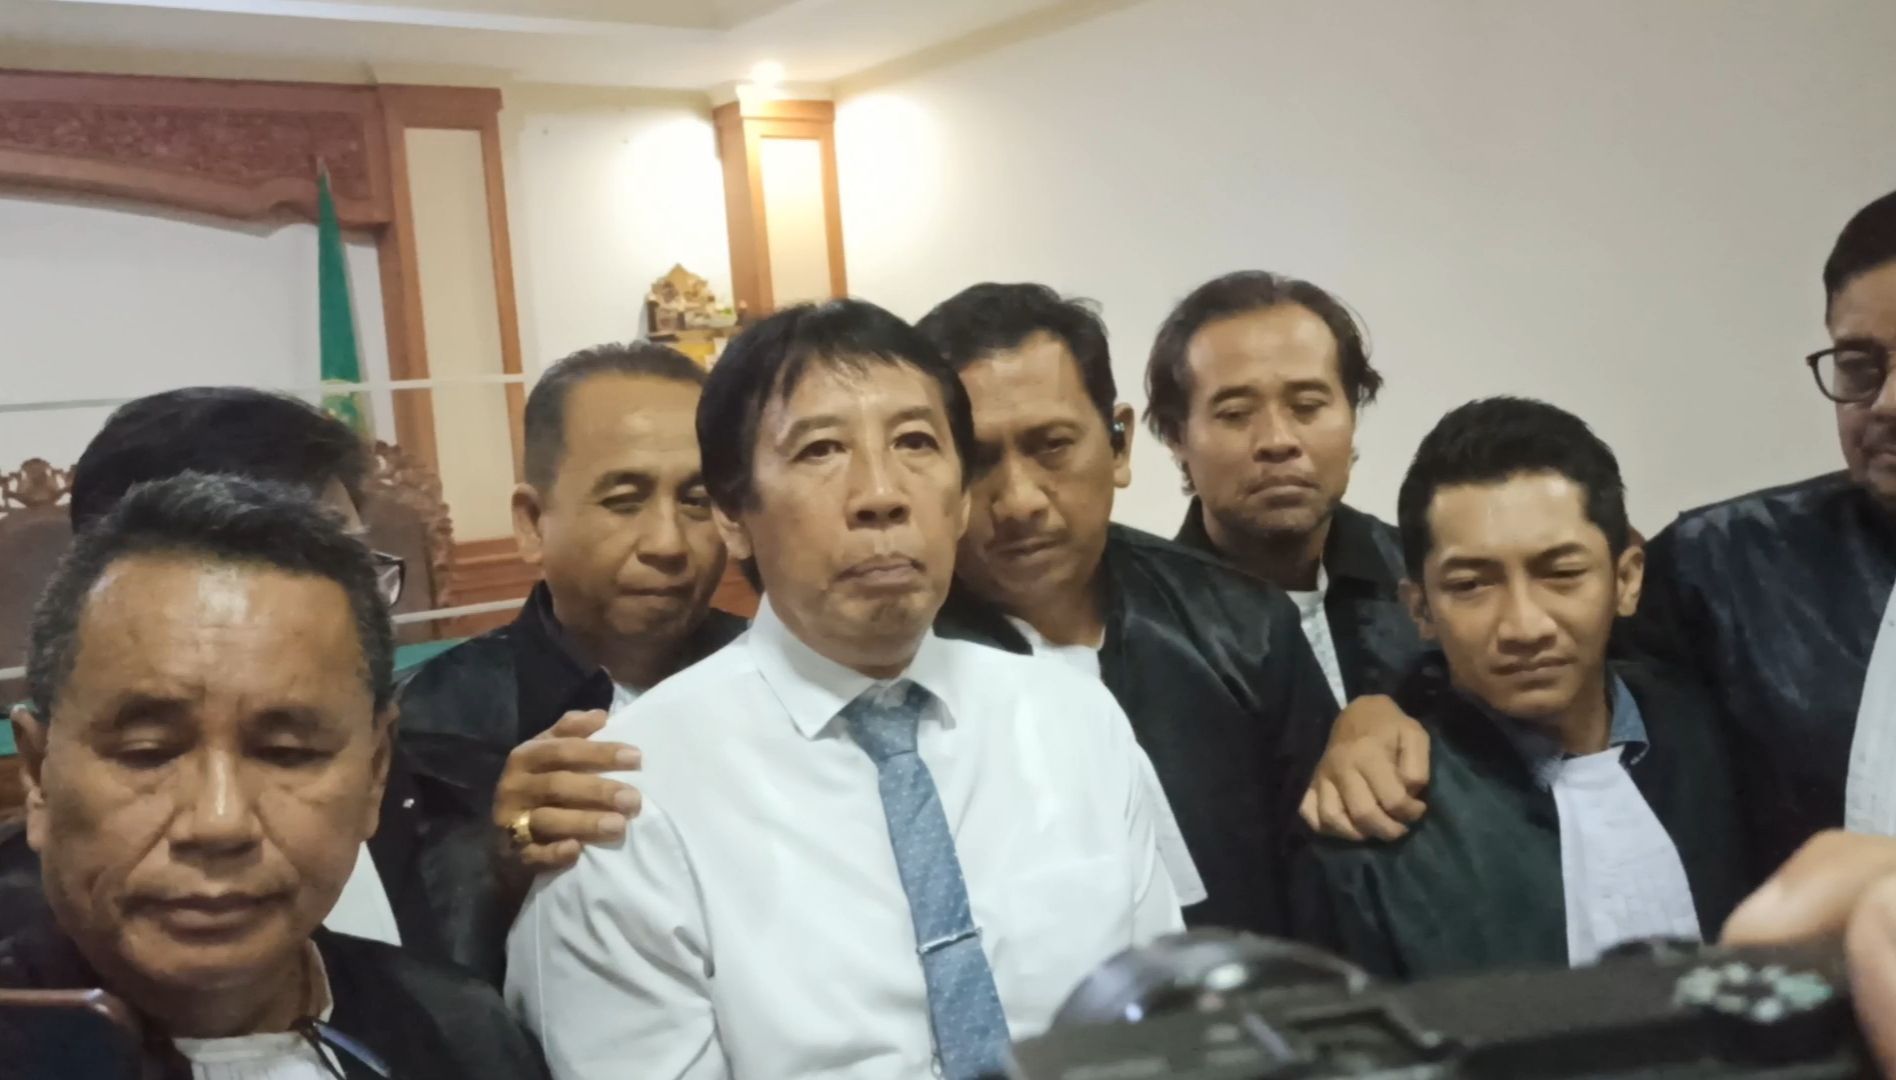 Kasus Korupsi Dana SPI, Rektor Nonaktif Universitas Udayana Bali Divonis Bebas